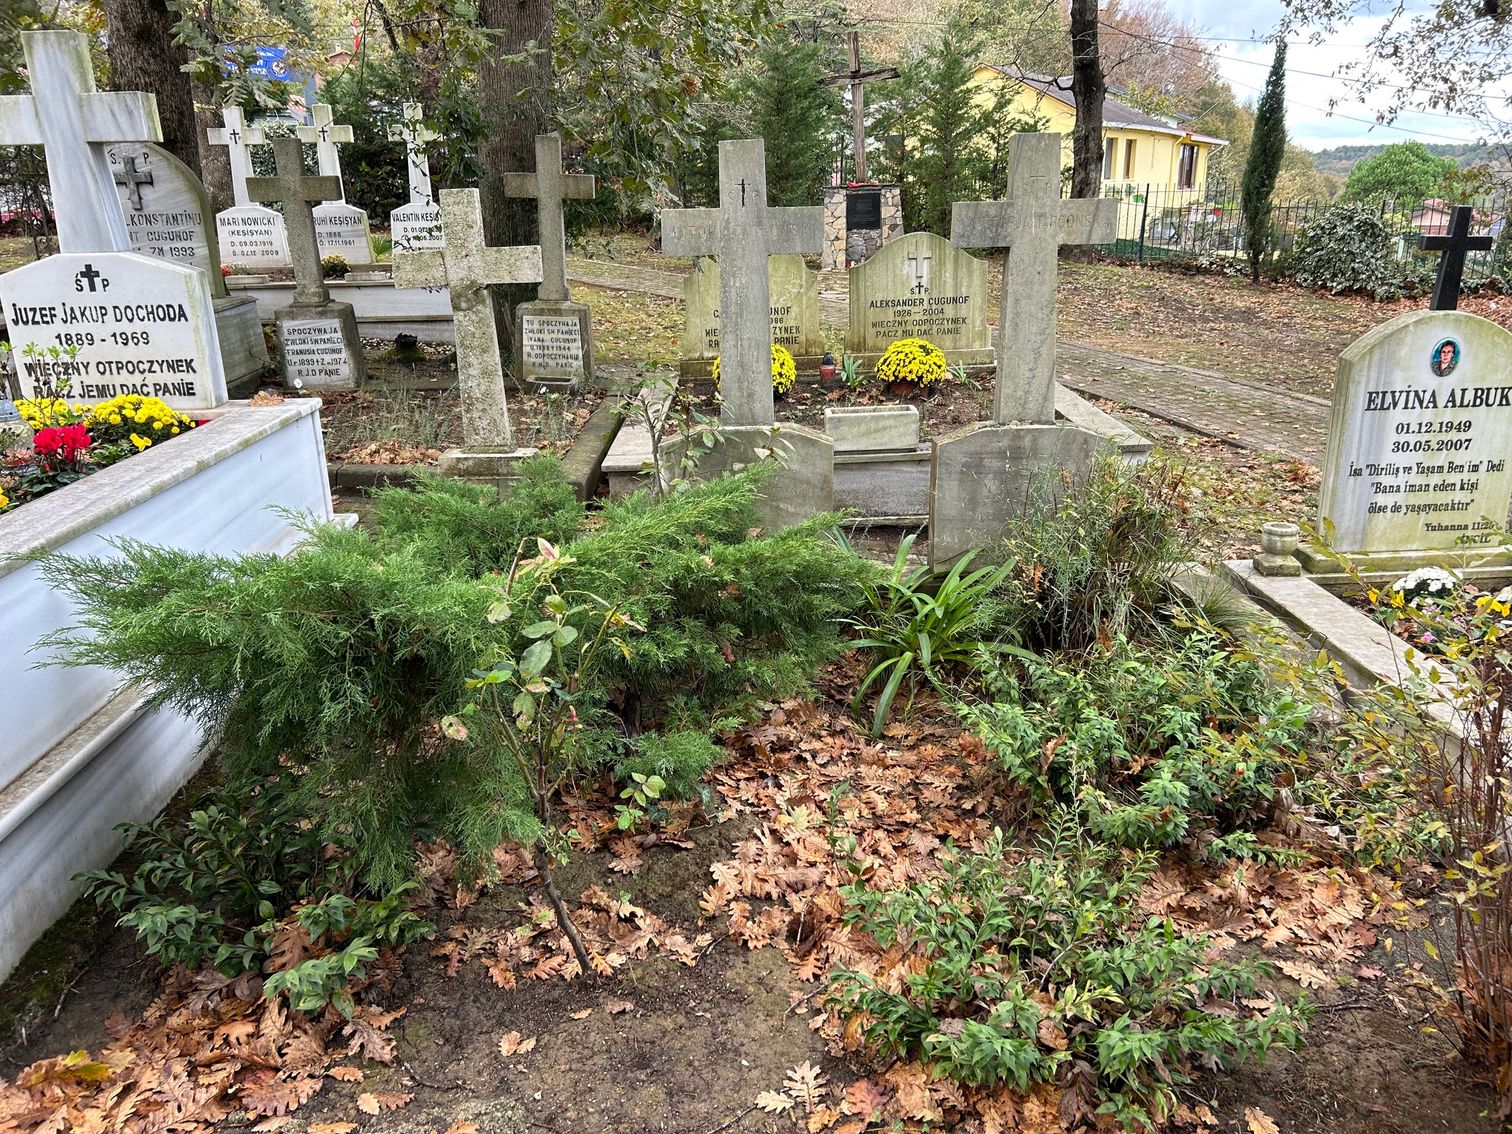 Tombstone of Anastasia Chugunov (left), Catholic cemetery in Adampol